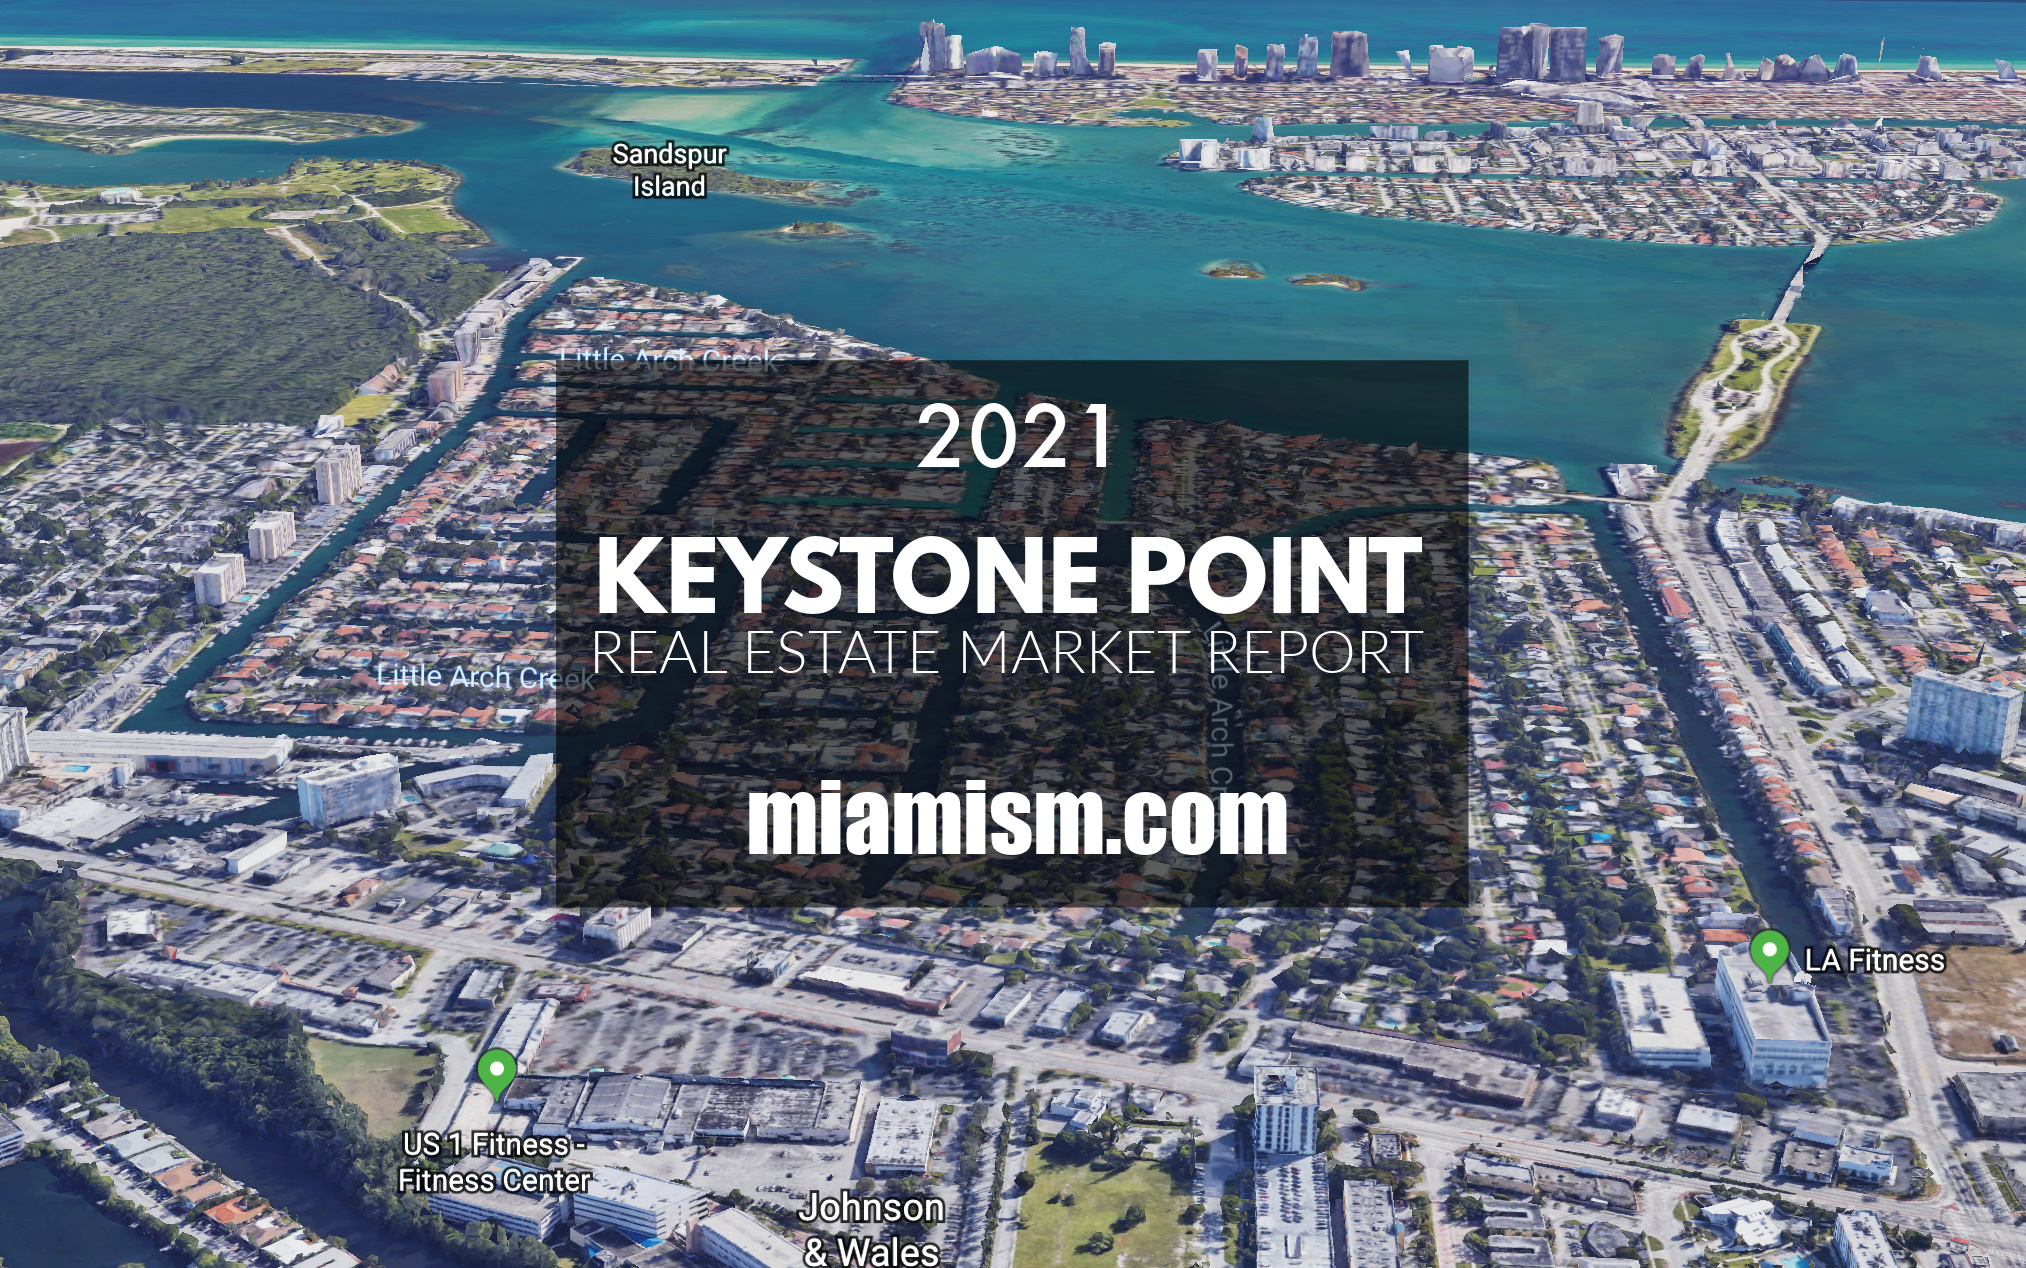 keystone point real estate market report 2021